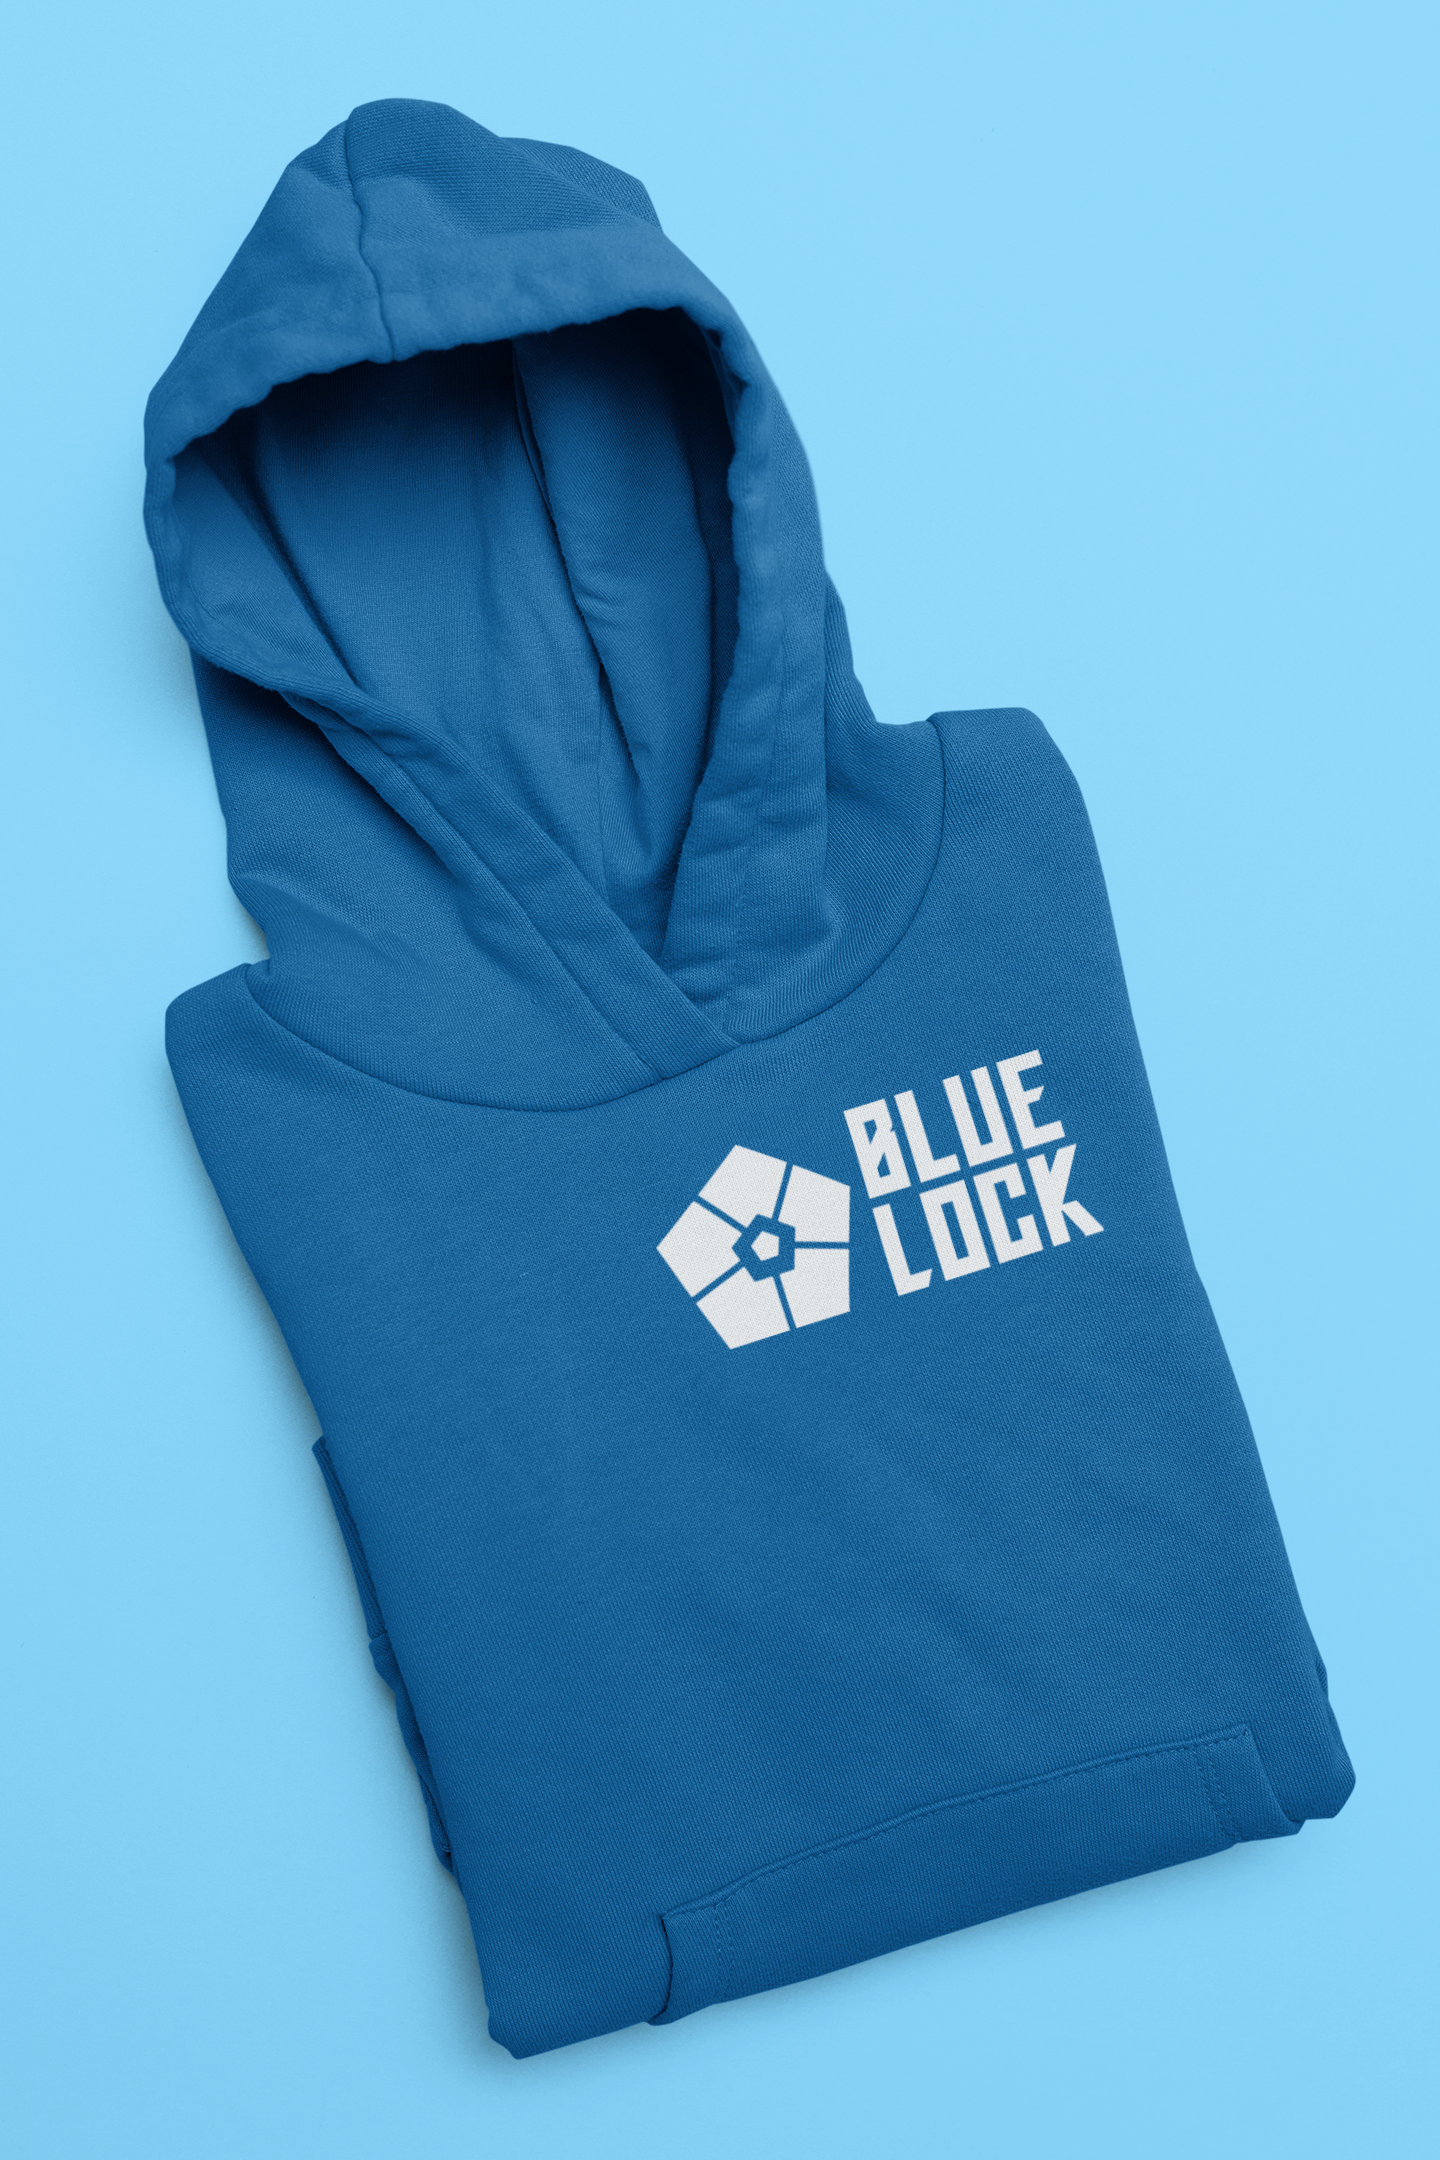 Blue Lock Anime Embroidered Hoodie